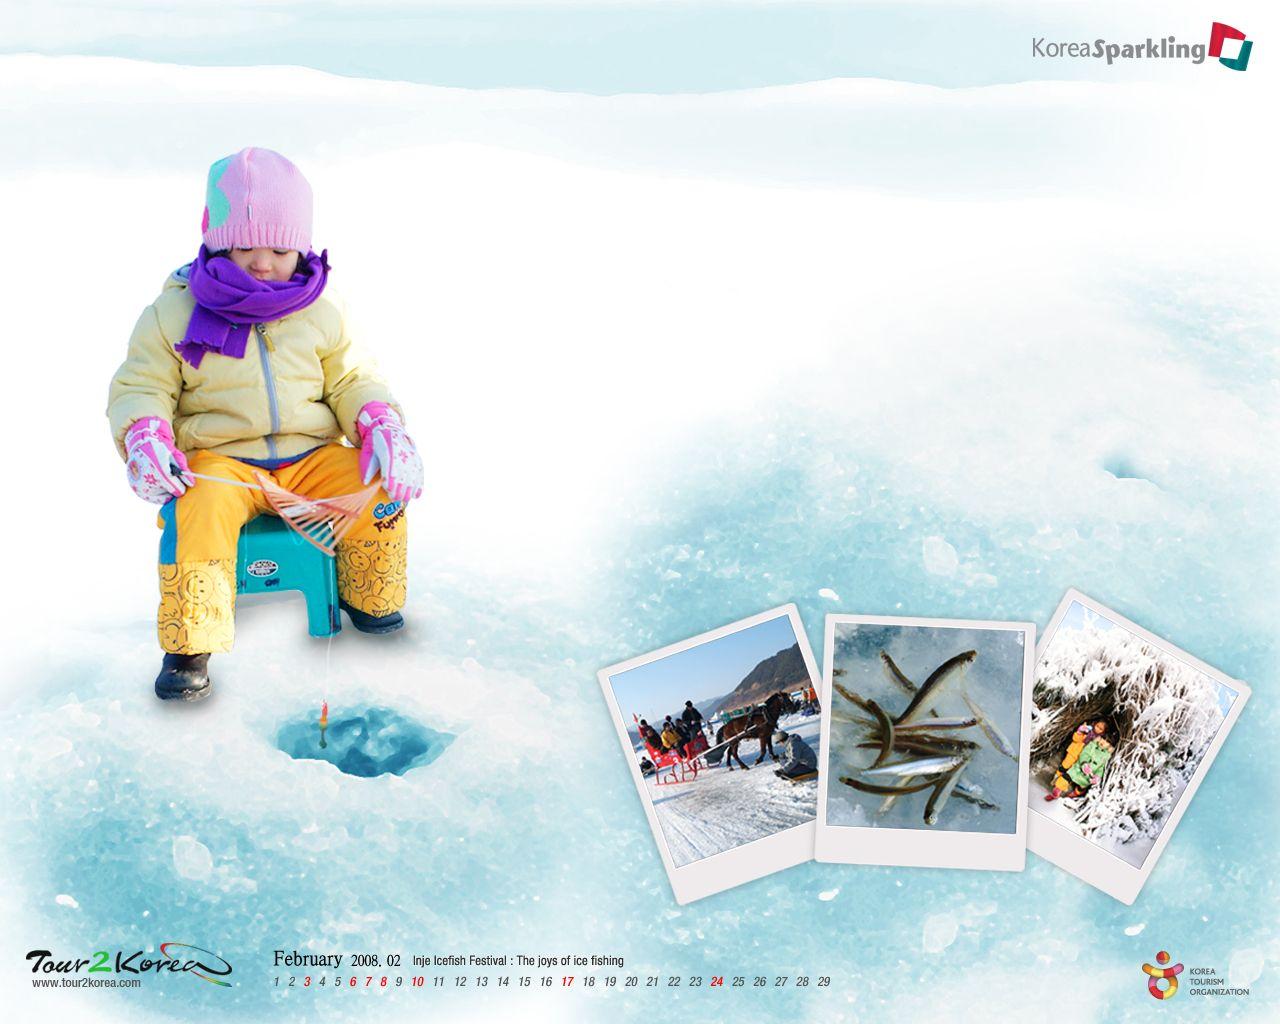 Official Site of Korea Tourism Org.: Wallpaper